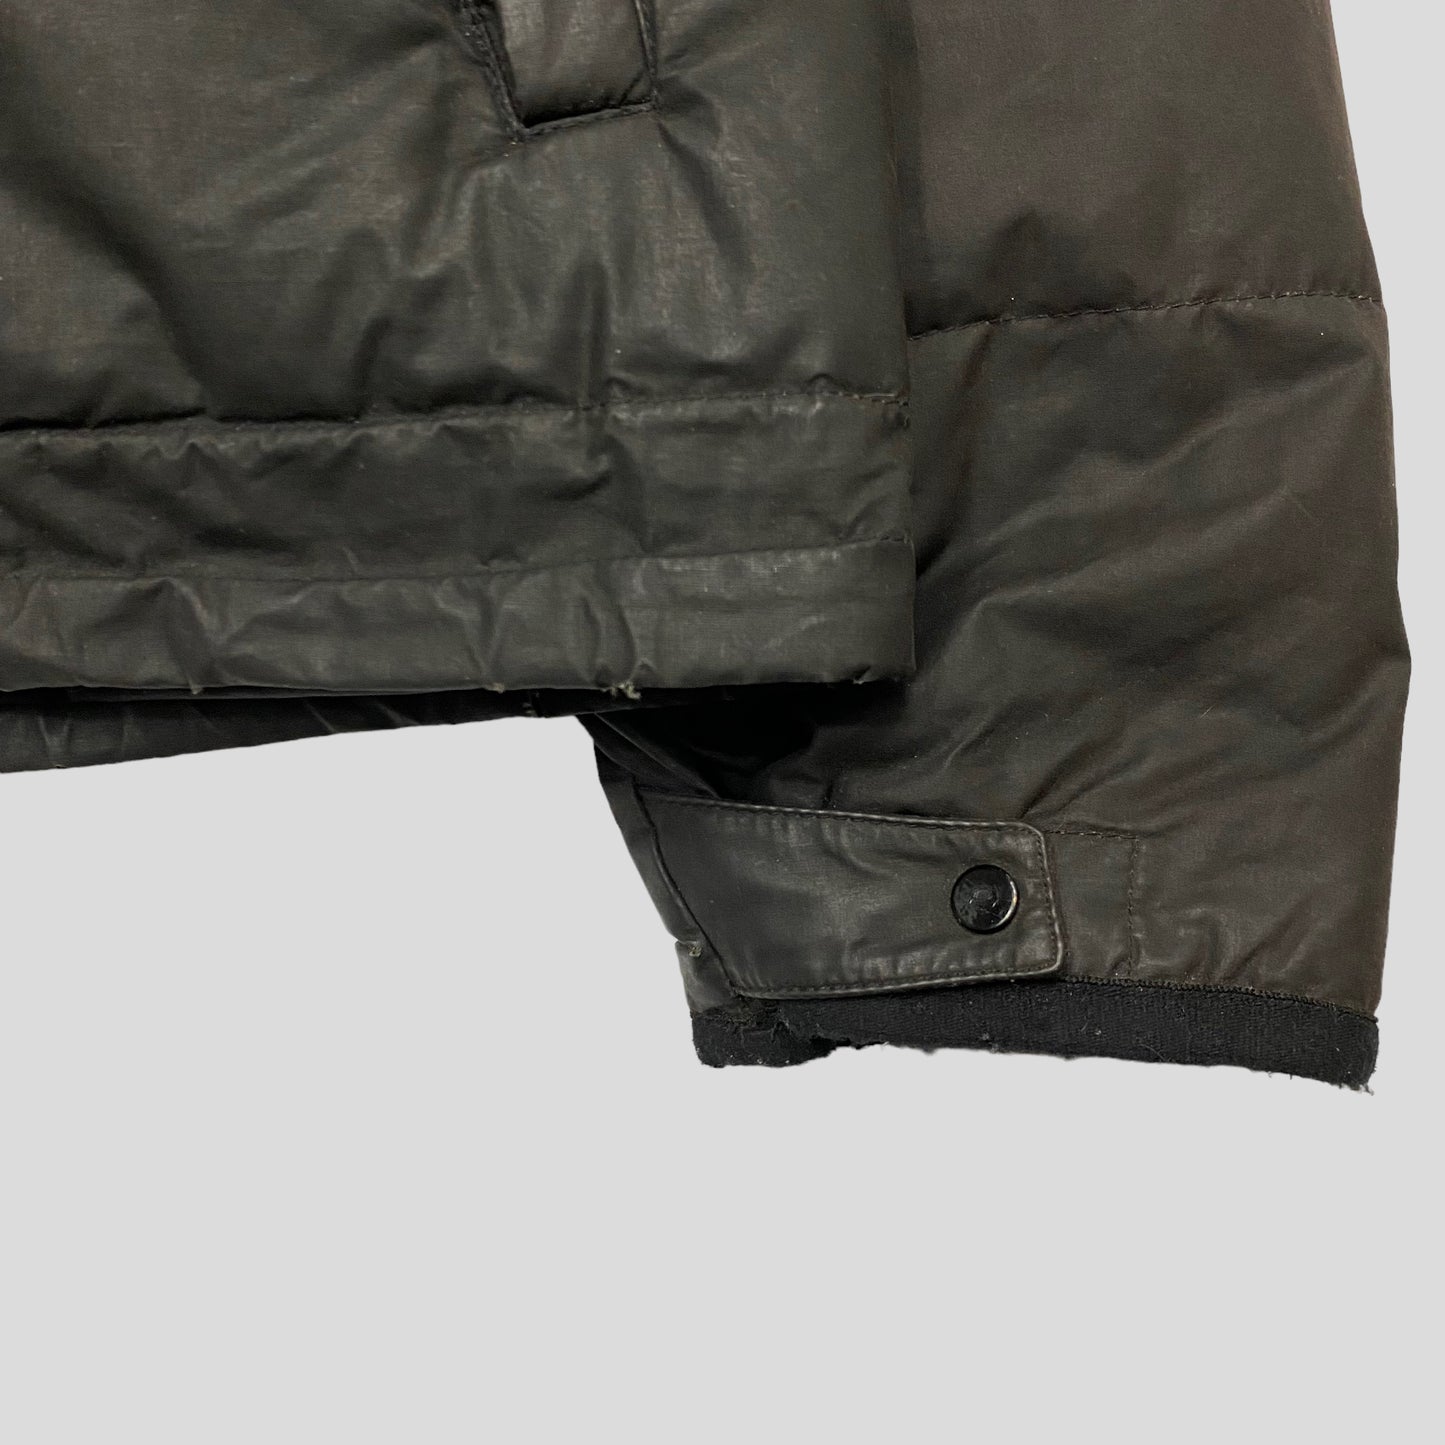 Stone Island AW99 Waxed Cotton Asymmetrical Puffer Jacket - S (M)